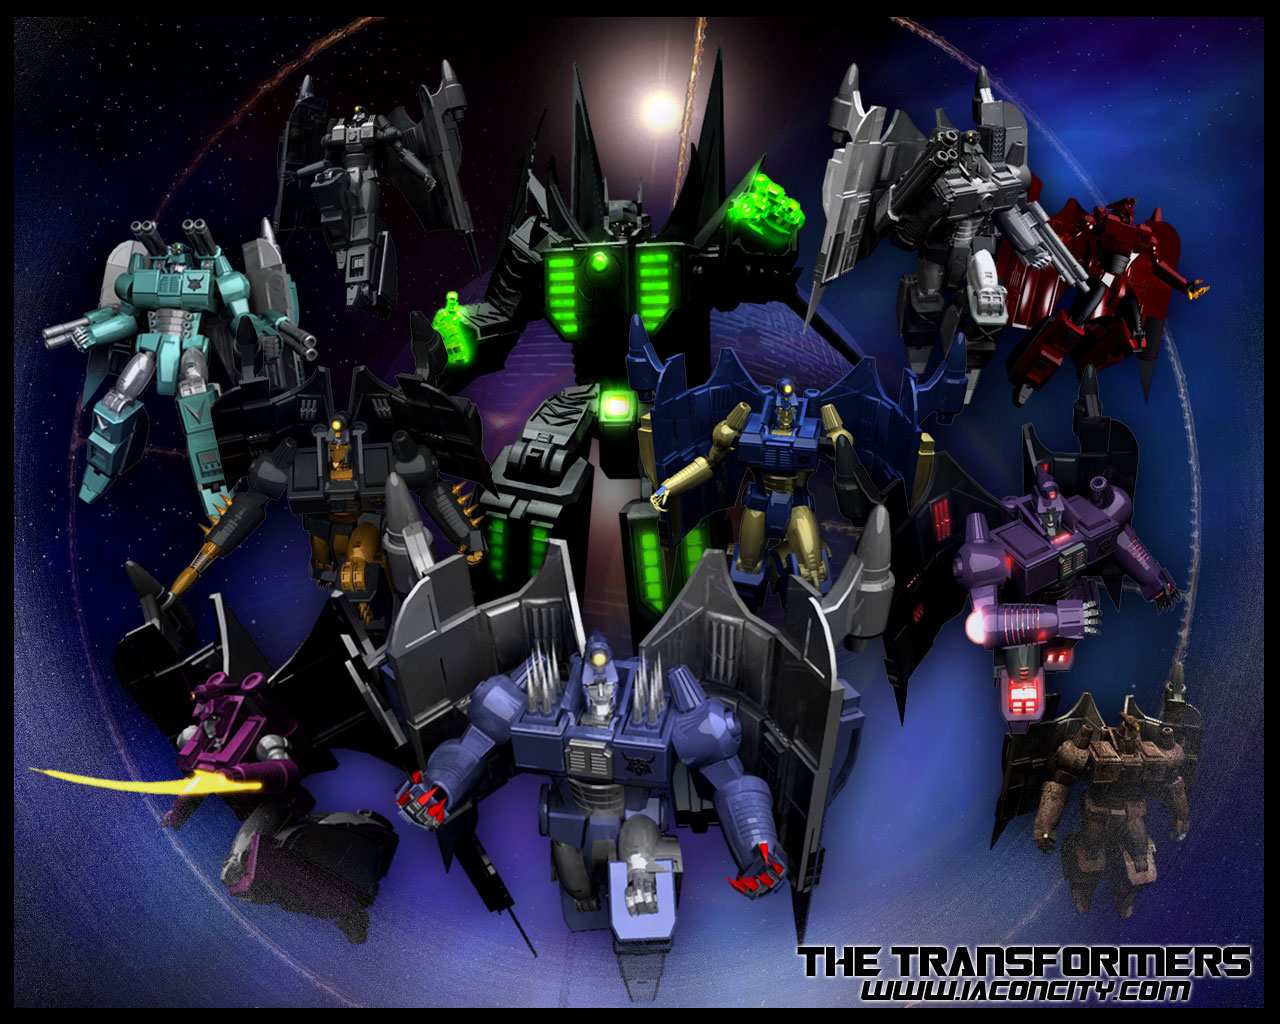 Transformers Generation 1 Wallpapers Full Size   G1 Big Hunt 1280 x 1280x1024